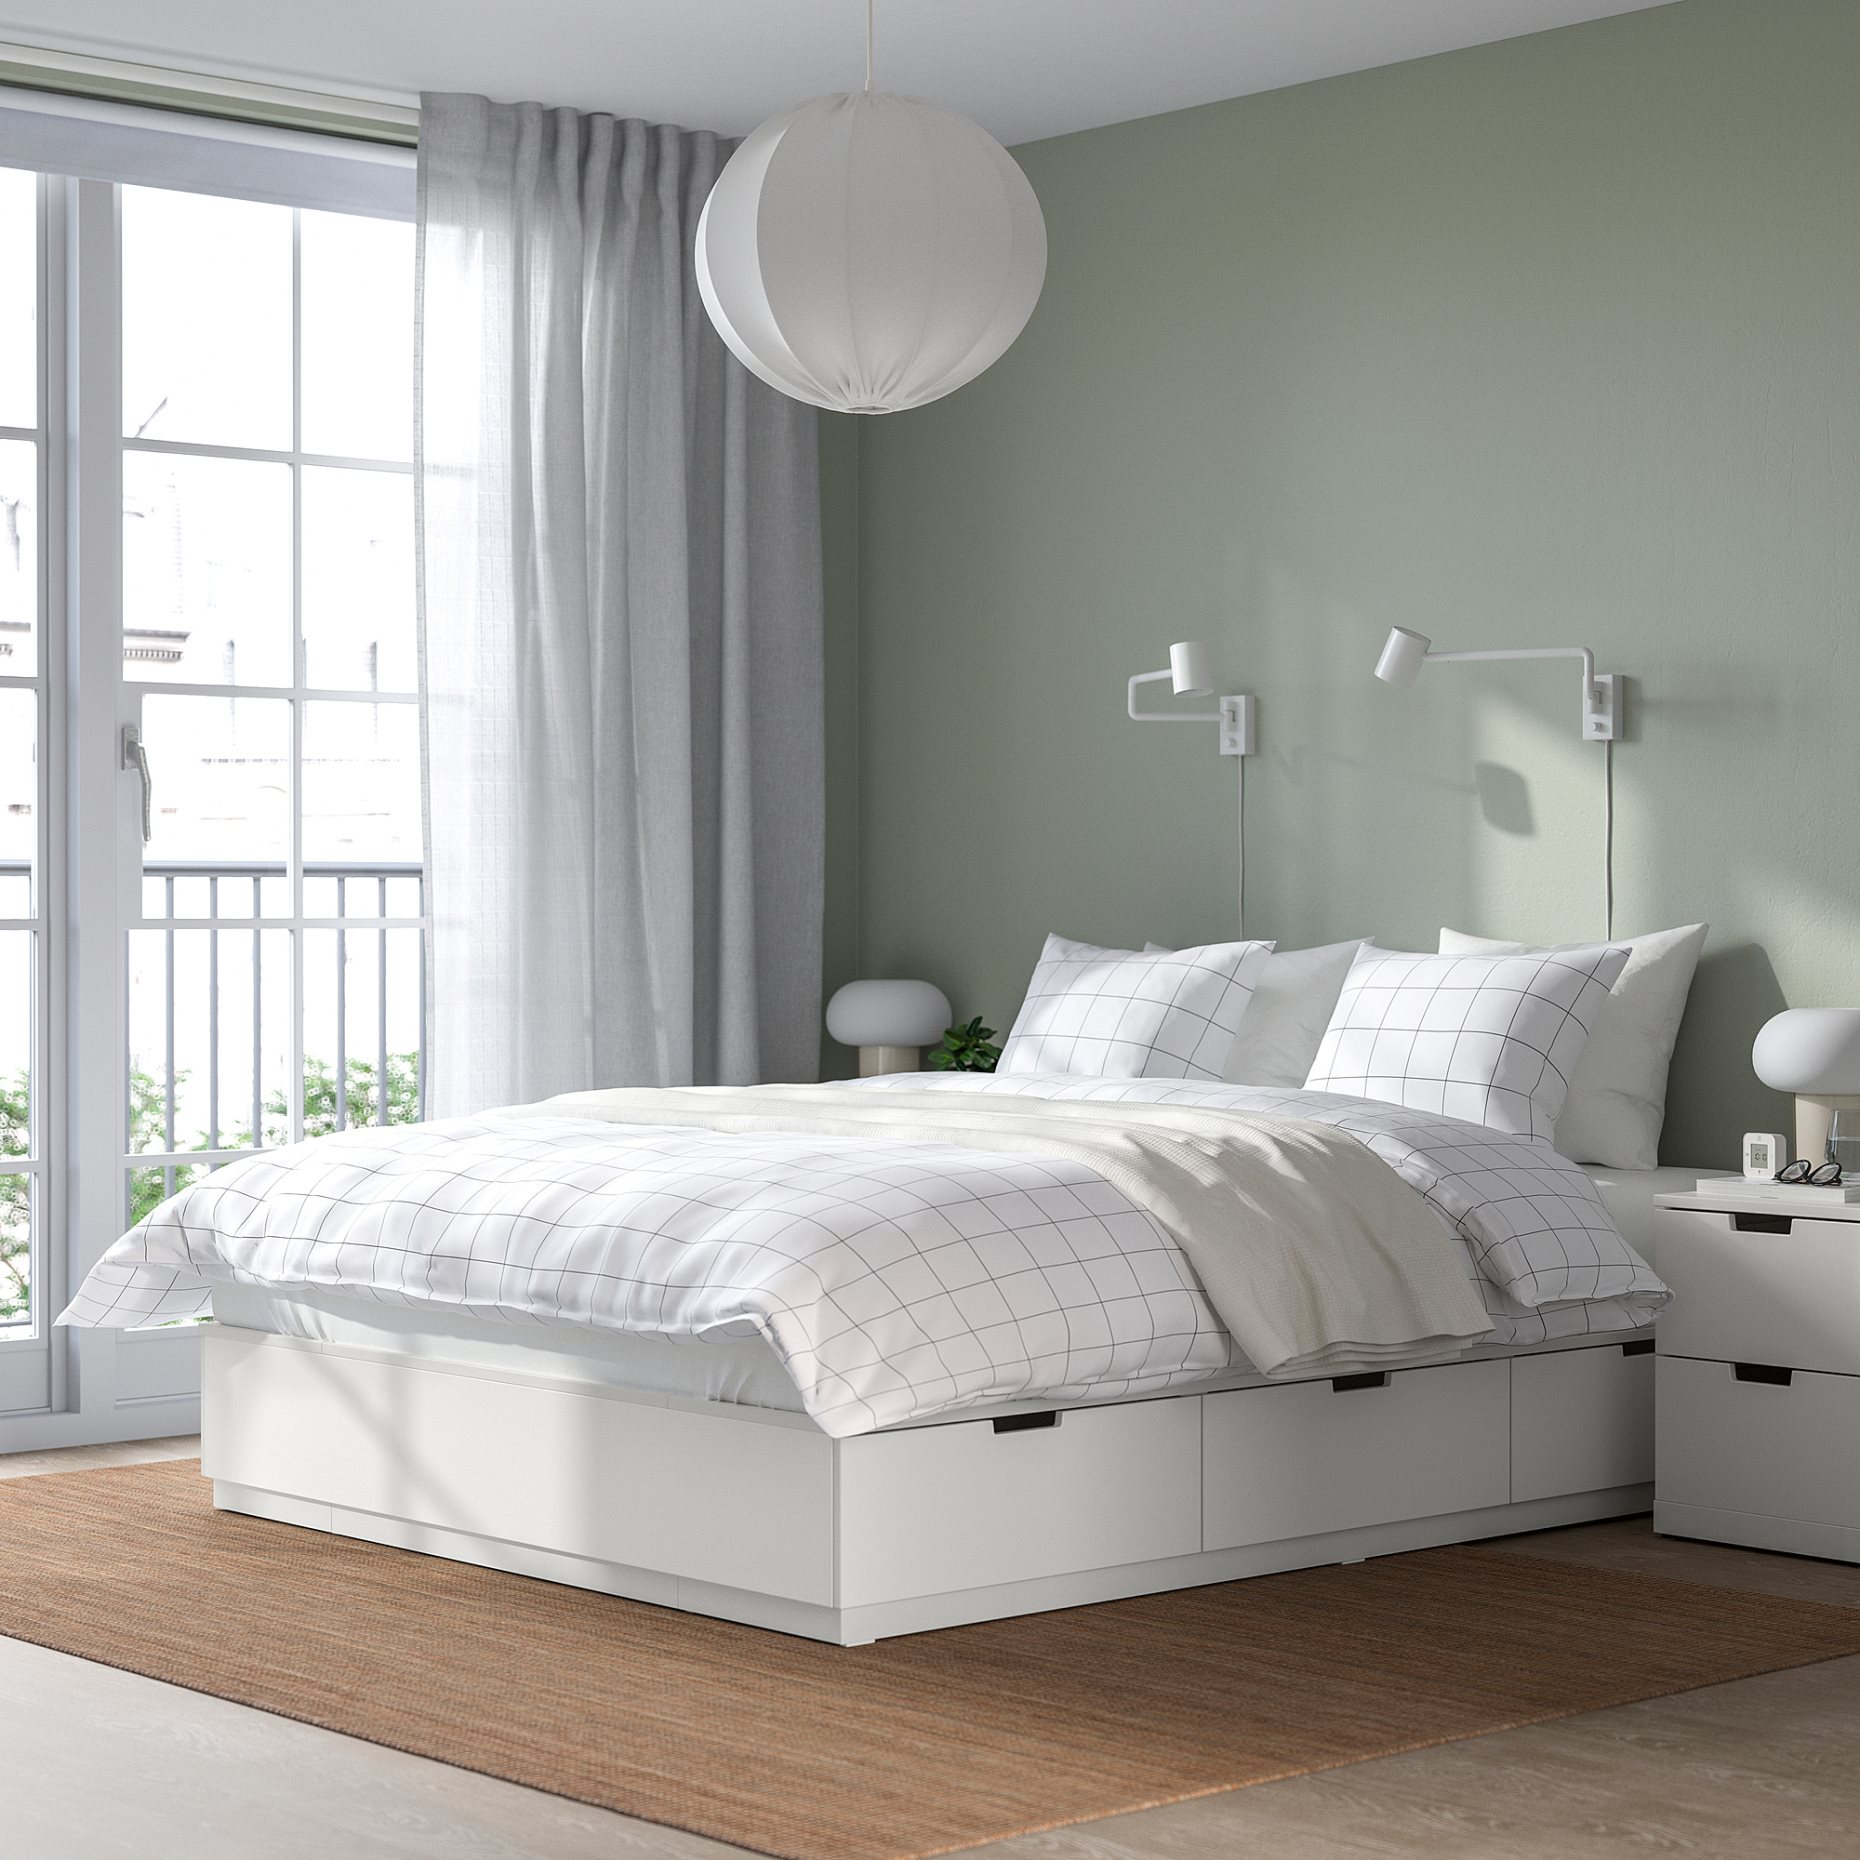 NORDLI, κρεβάτι με αποθηκευτικό χώρο, 140x200 cm, 403.498.47